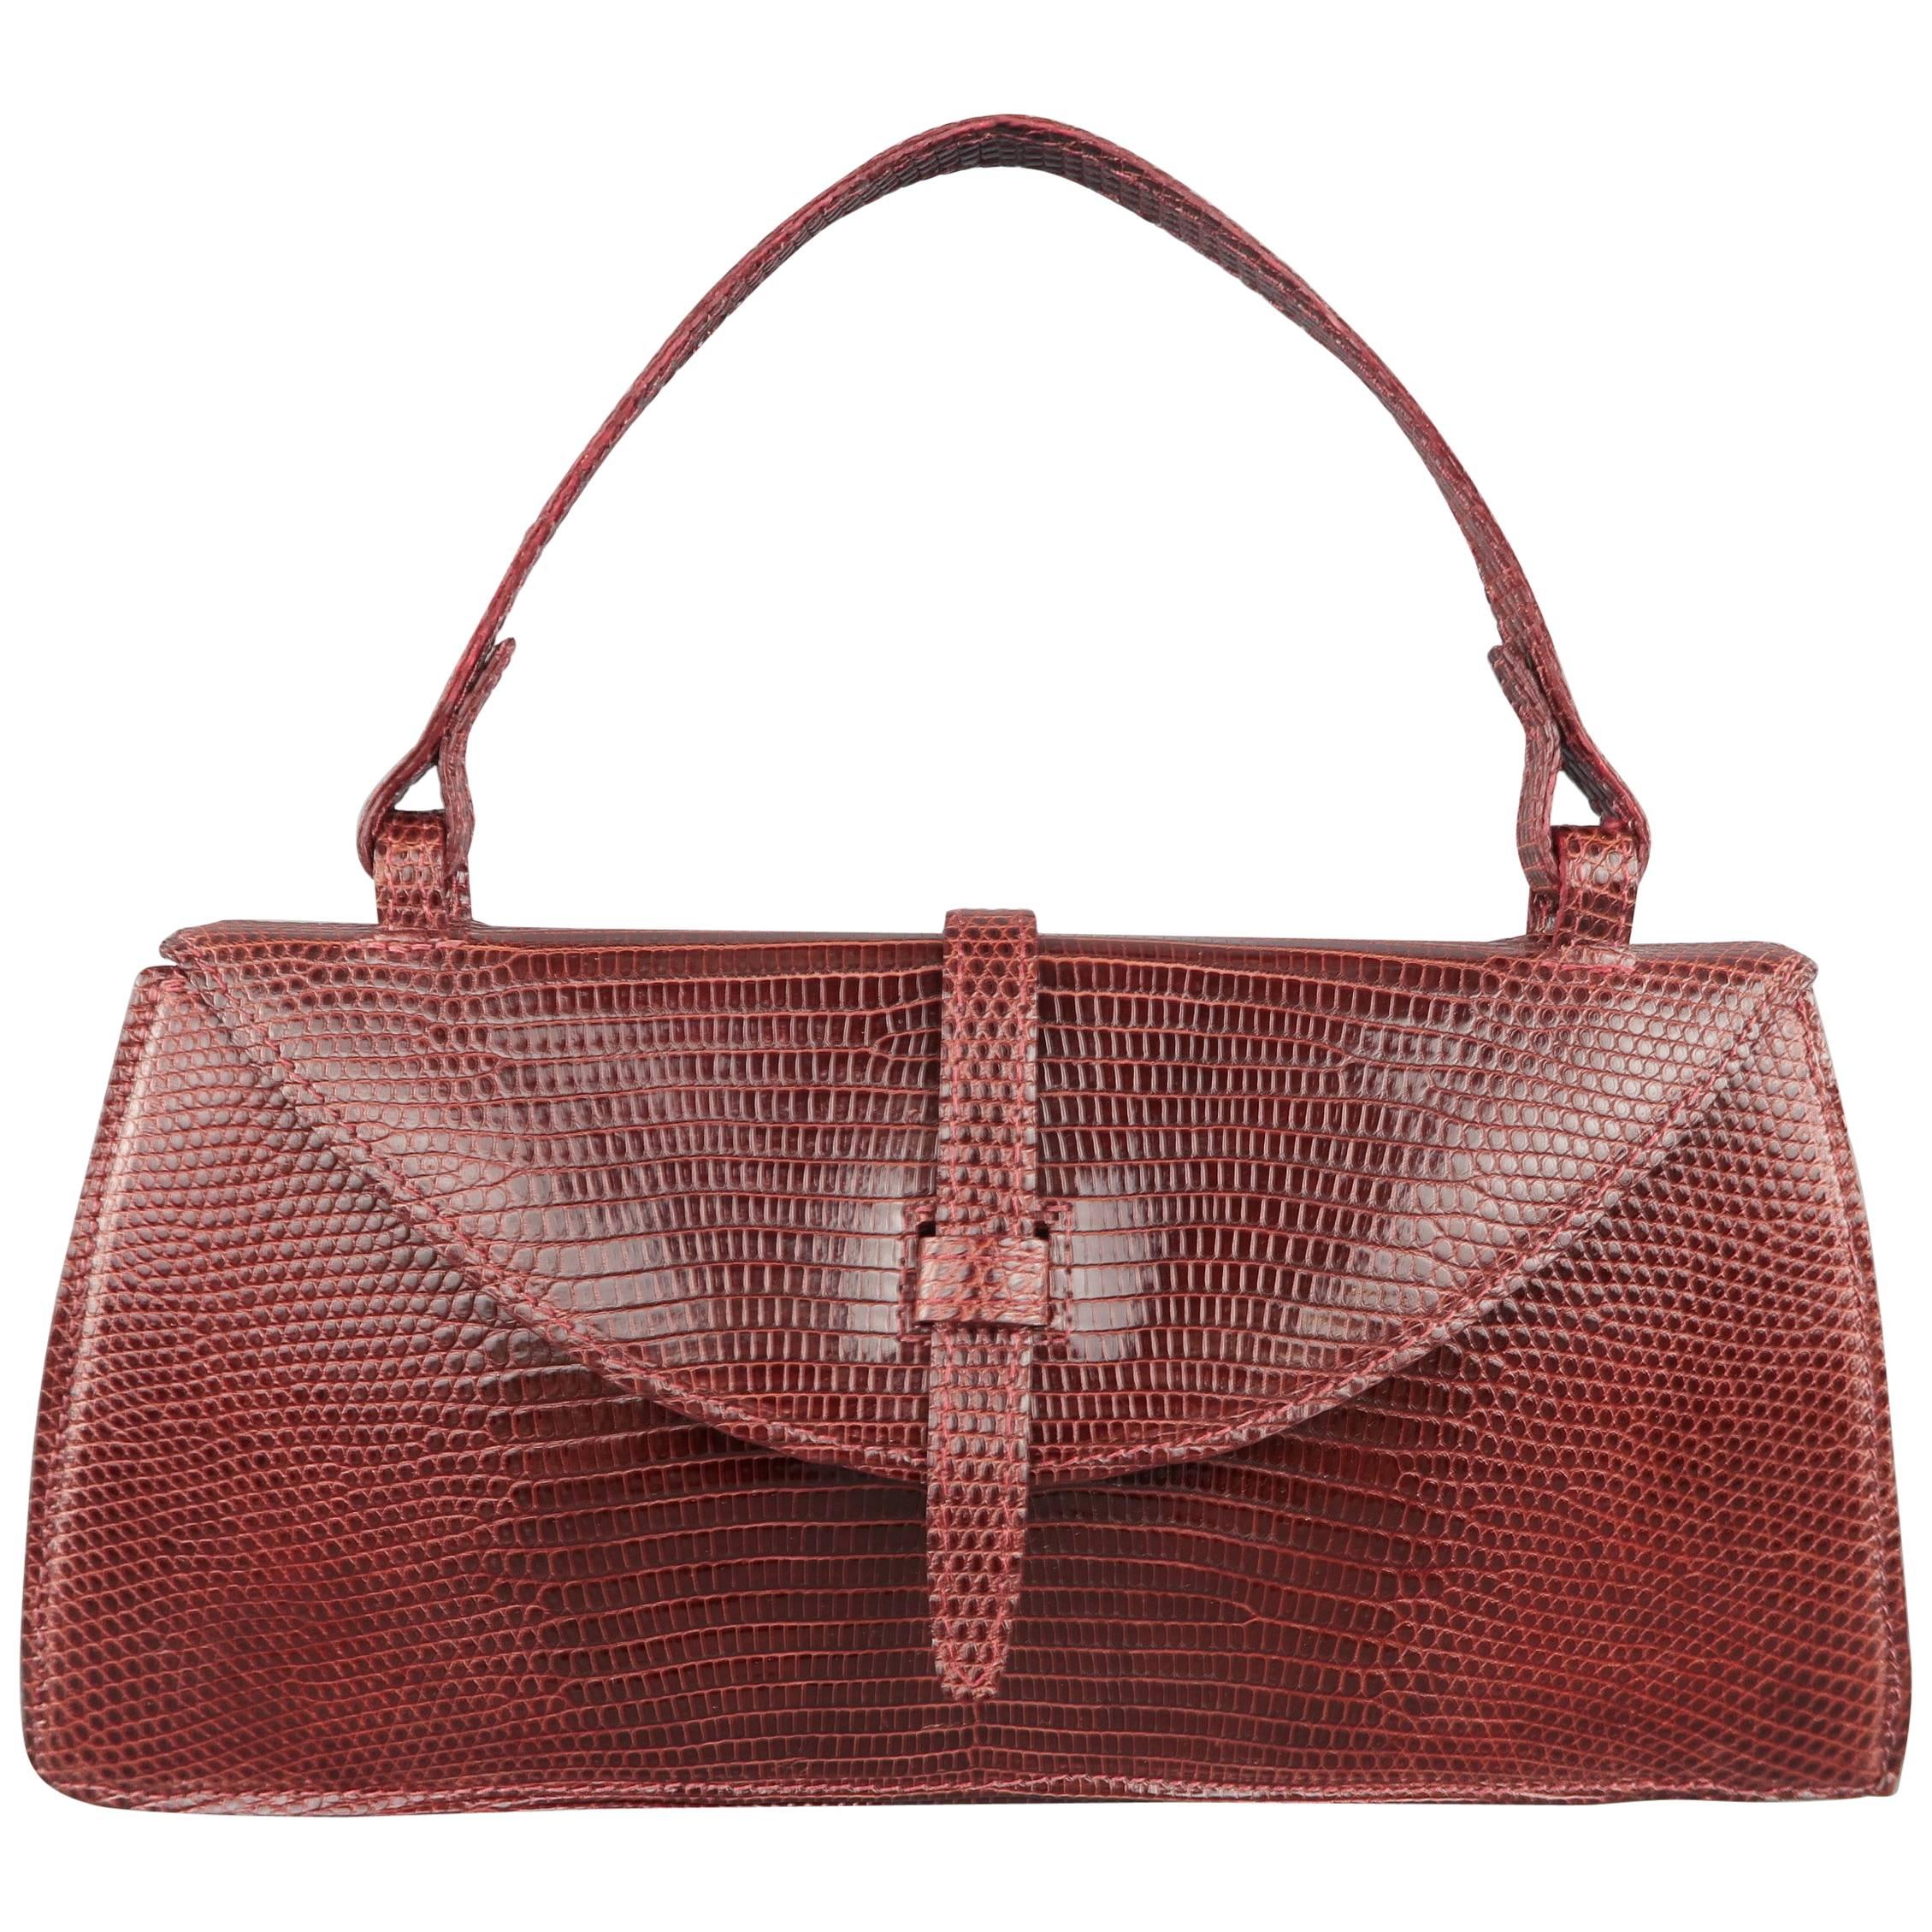 BETH LEVINE Burgundy Lizard Skin Top Handle Handbag